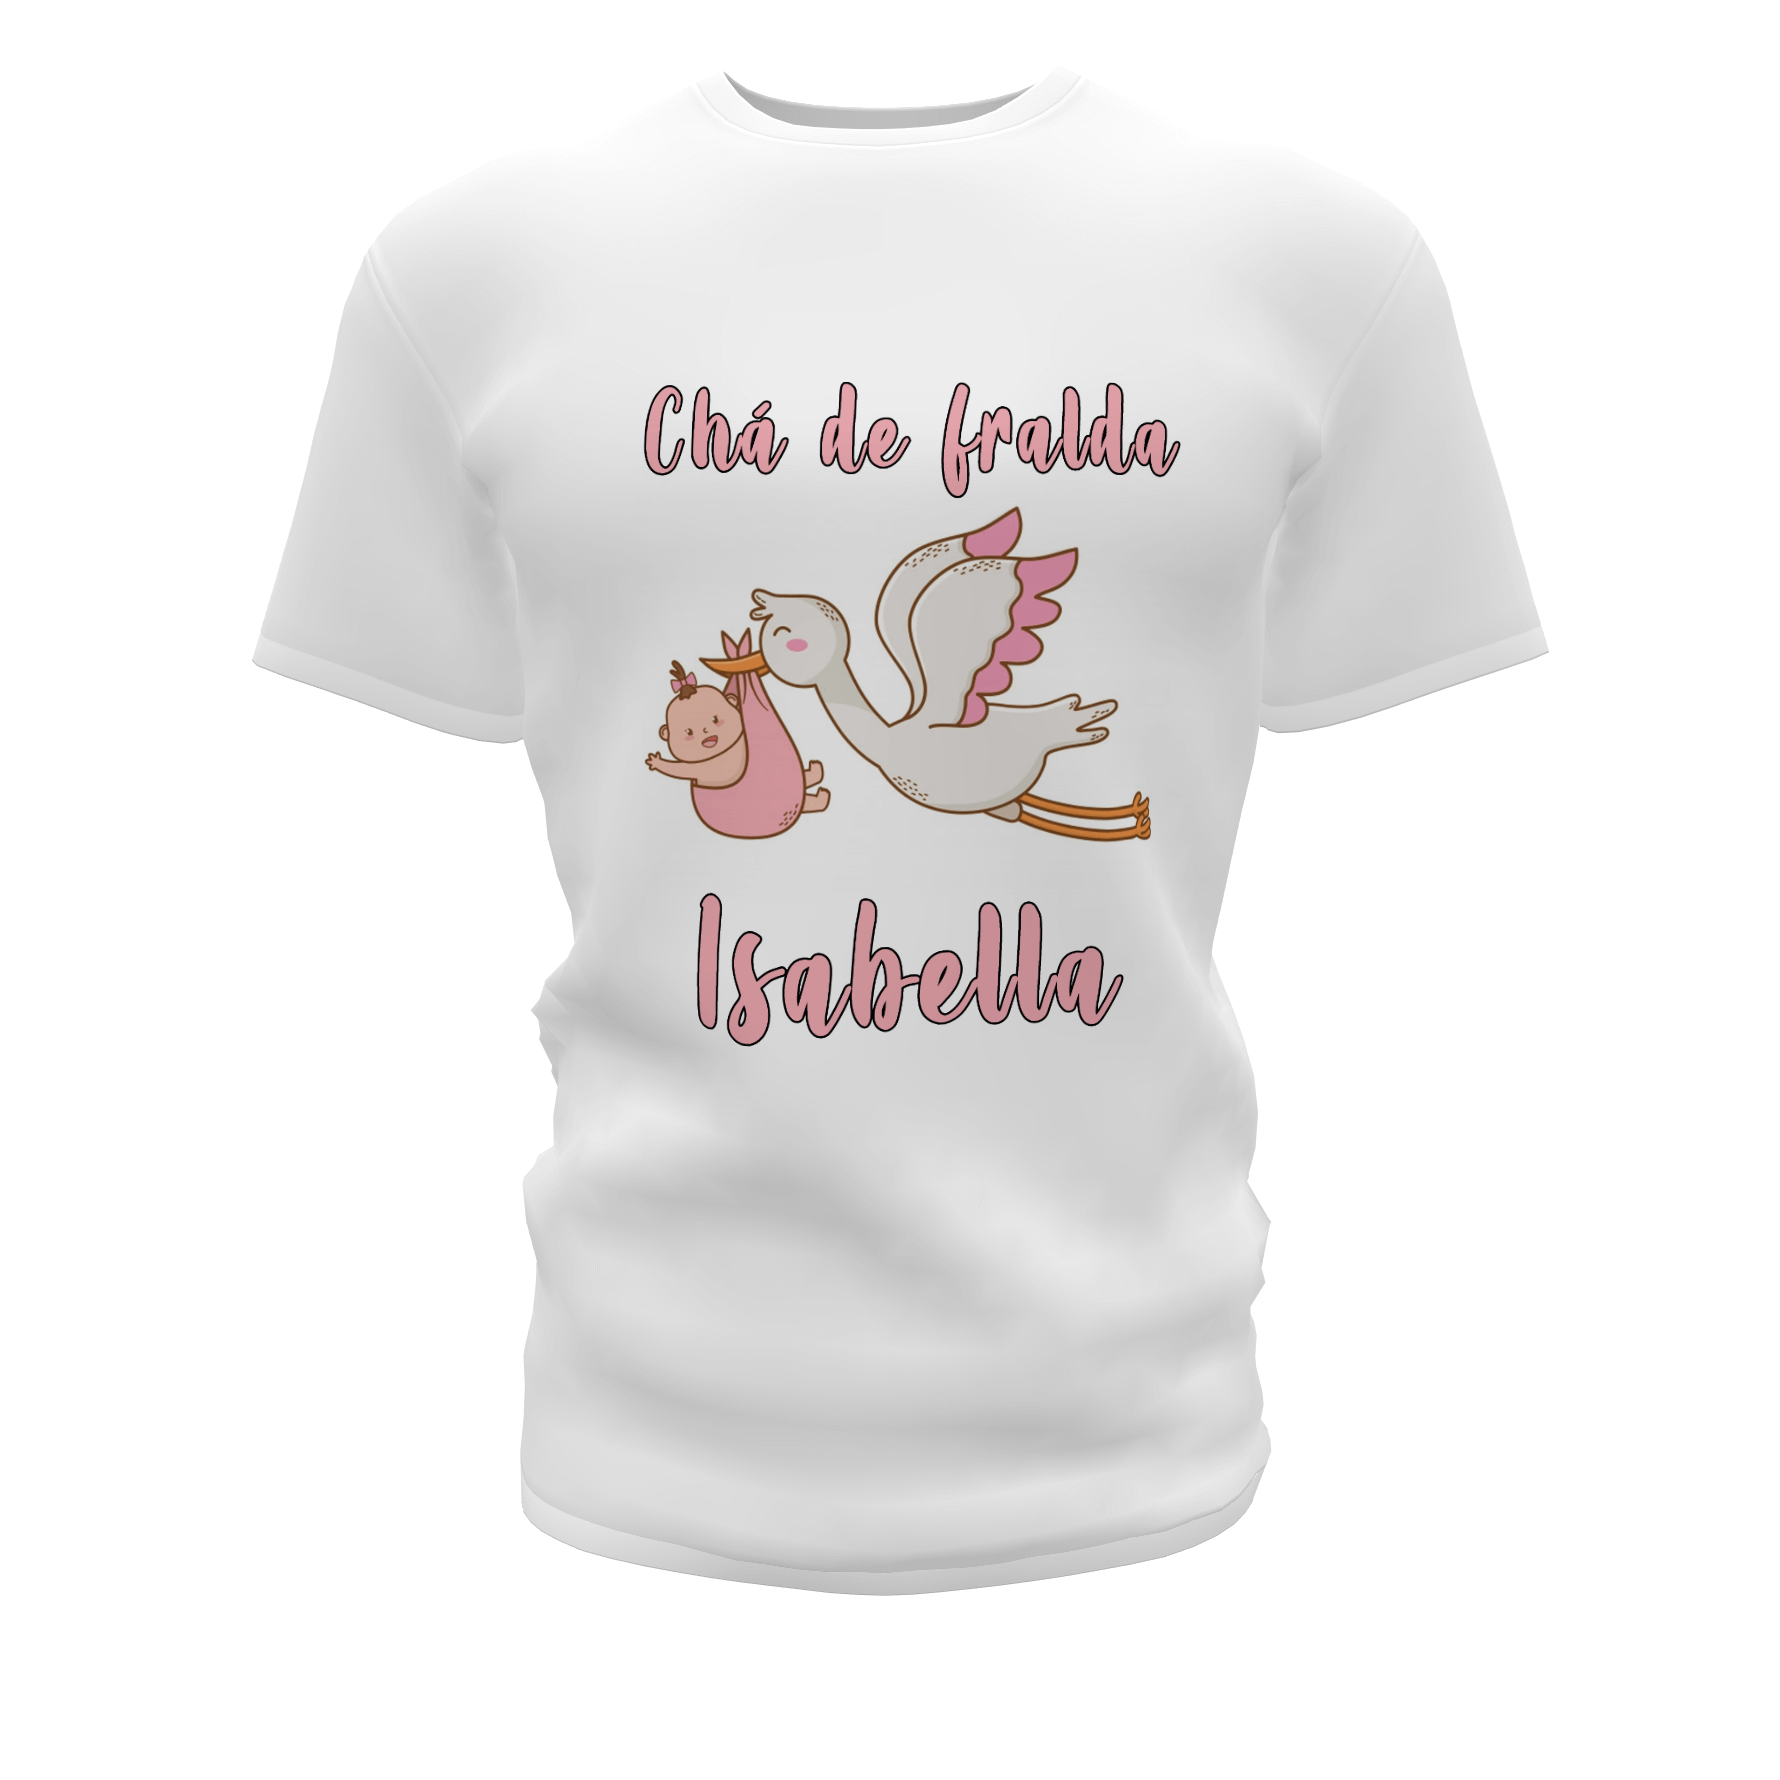 Camisetas Personalizadas para Chá de Fraldas